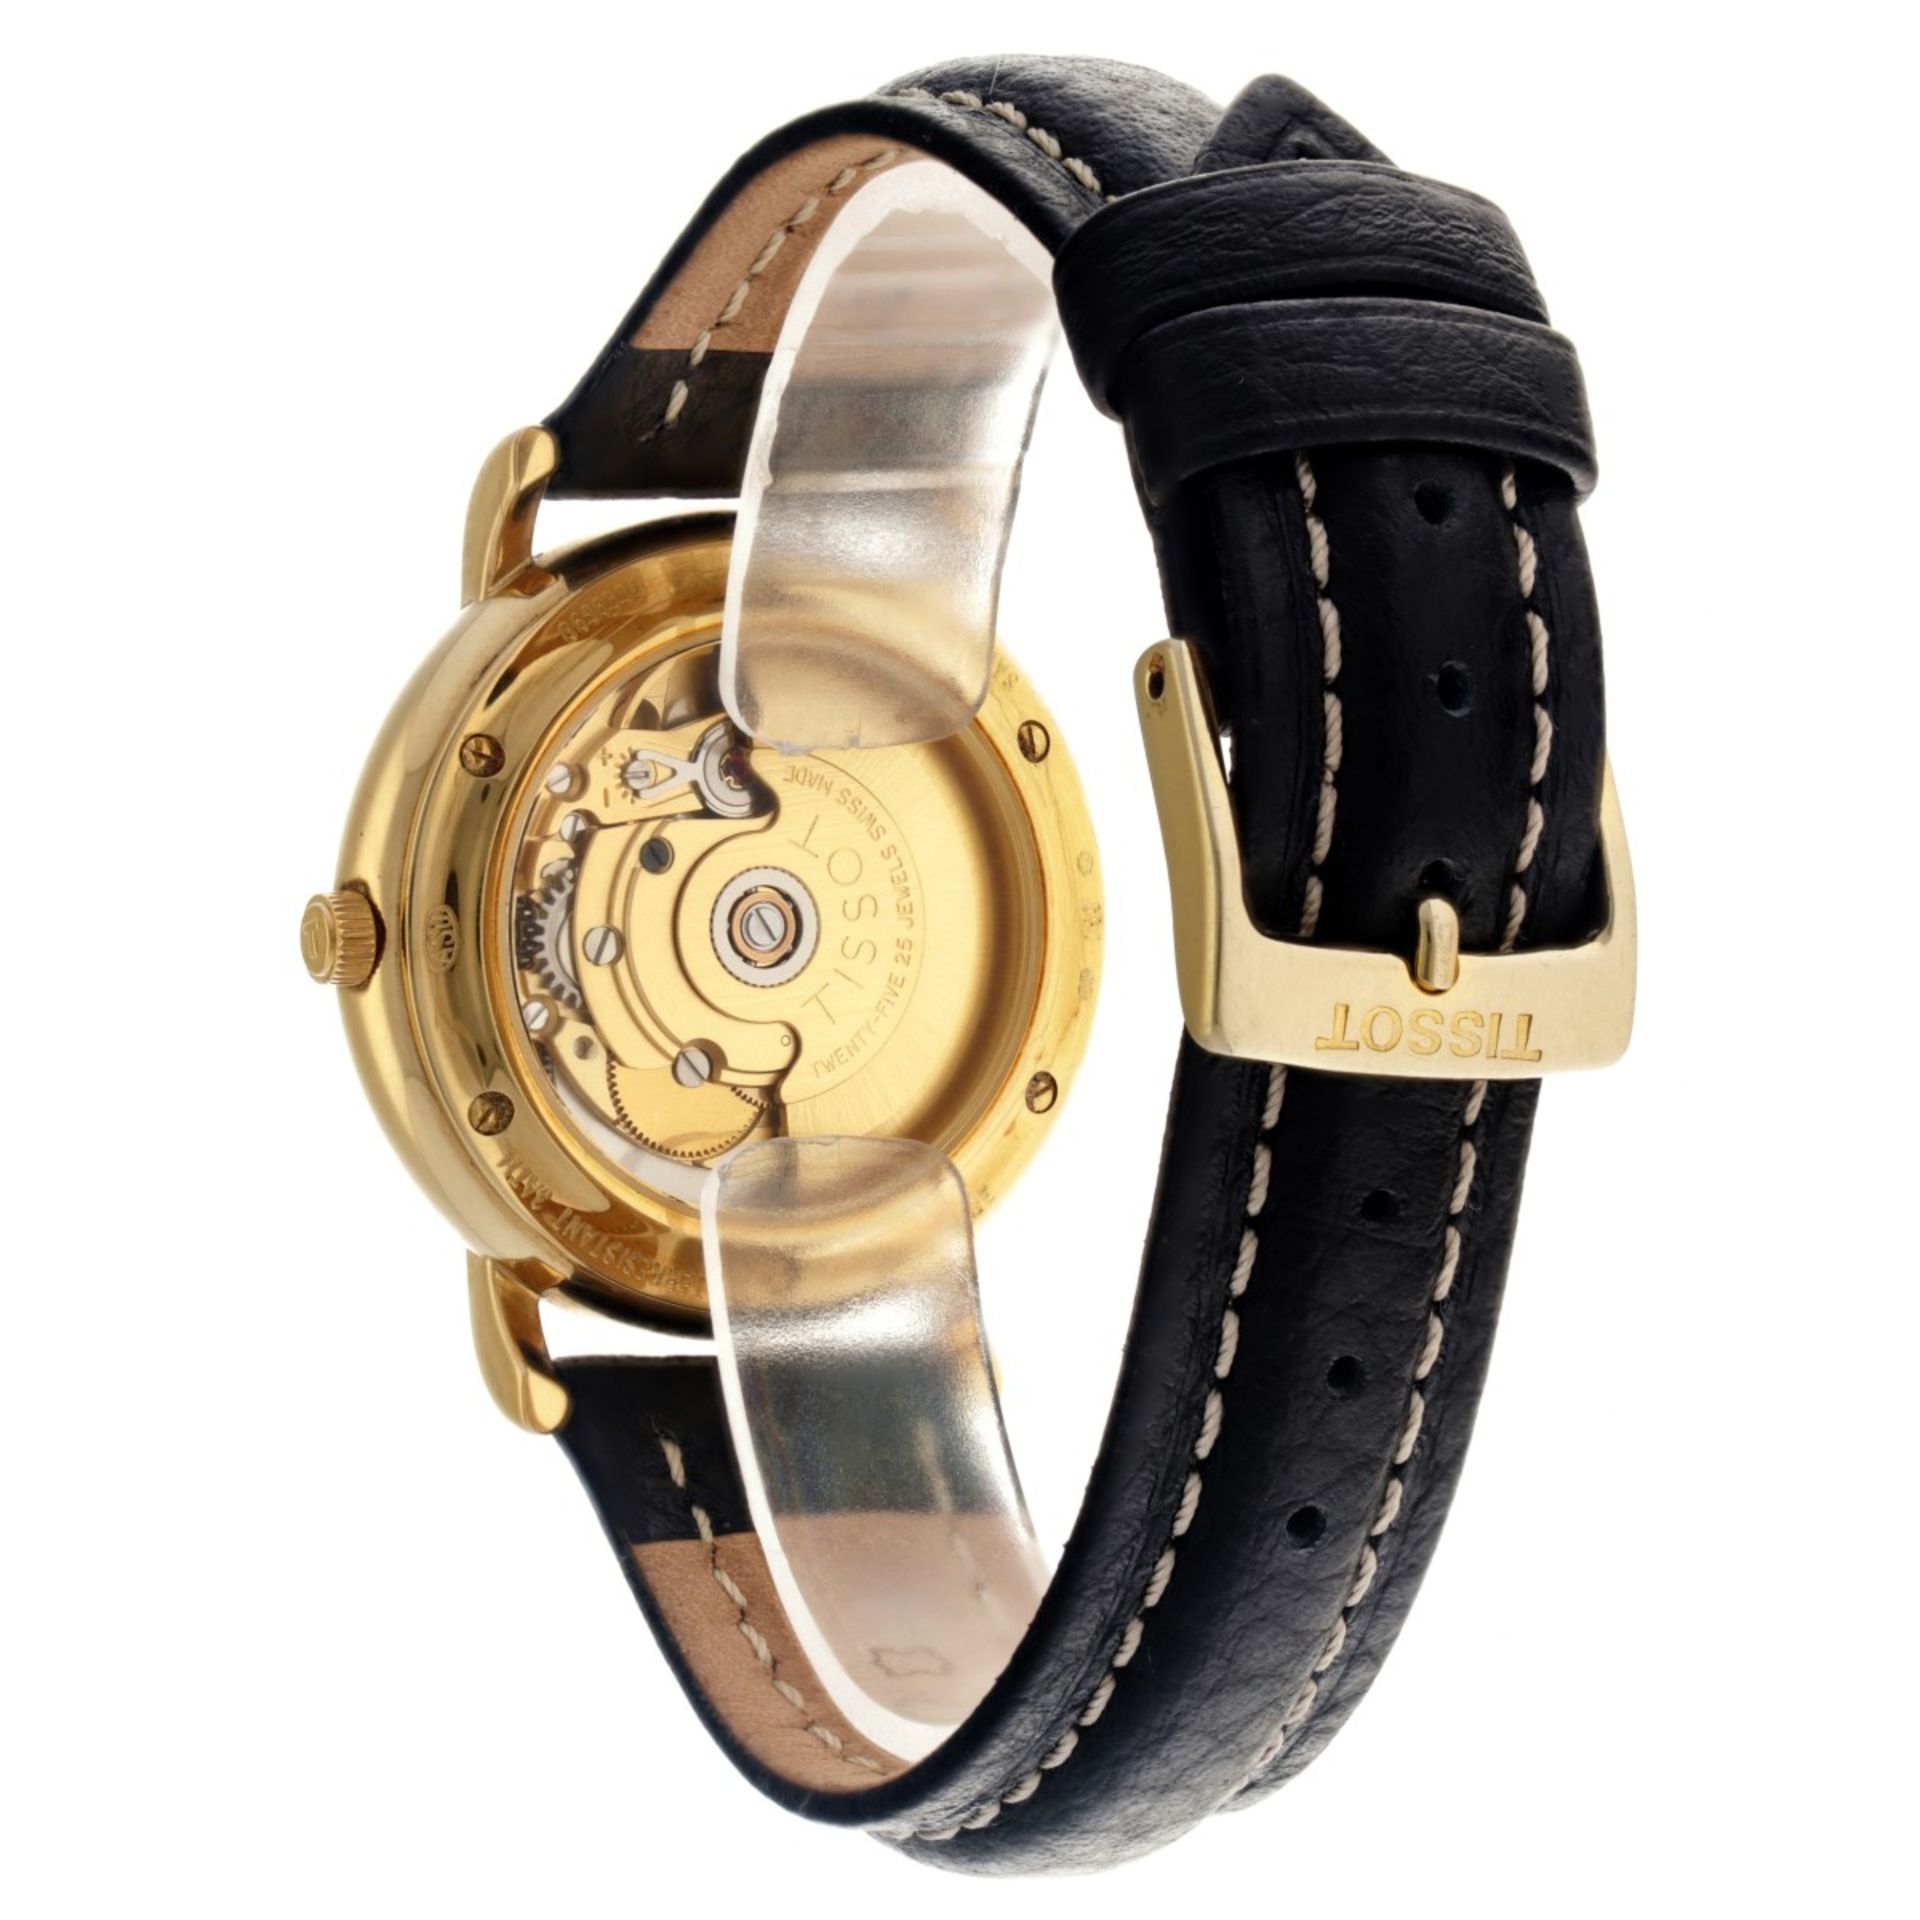 Tissot T-Gold T71.3.444.13 - Men's watch - 2011. - Image 5 of 6